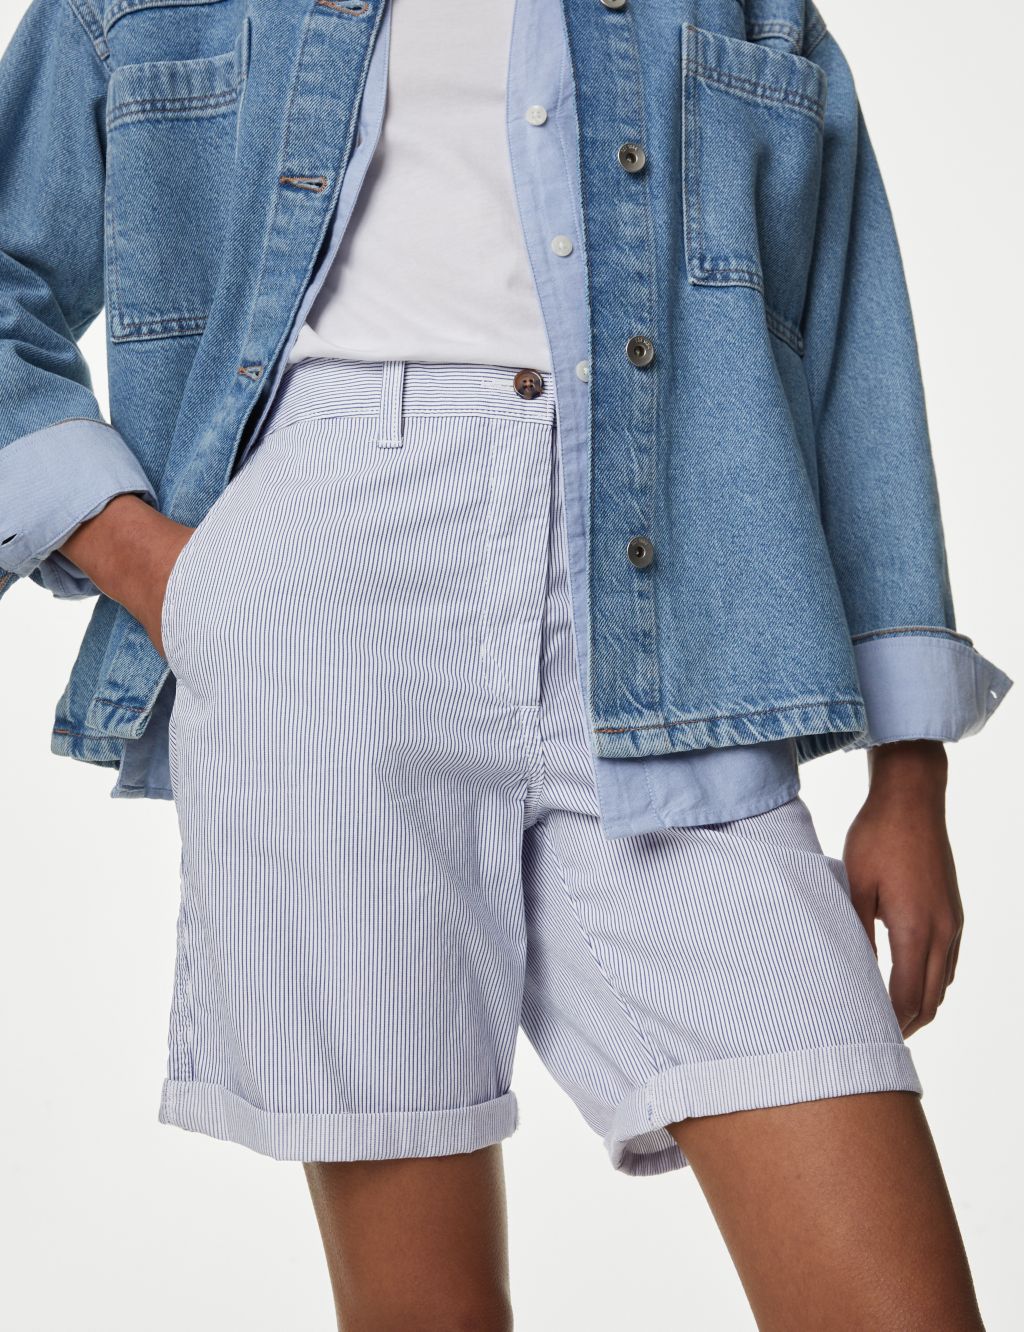 Cotton Rich Striped Chino Shorts image 2